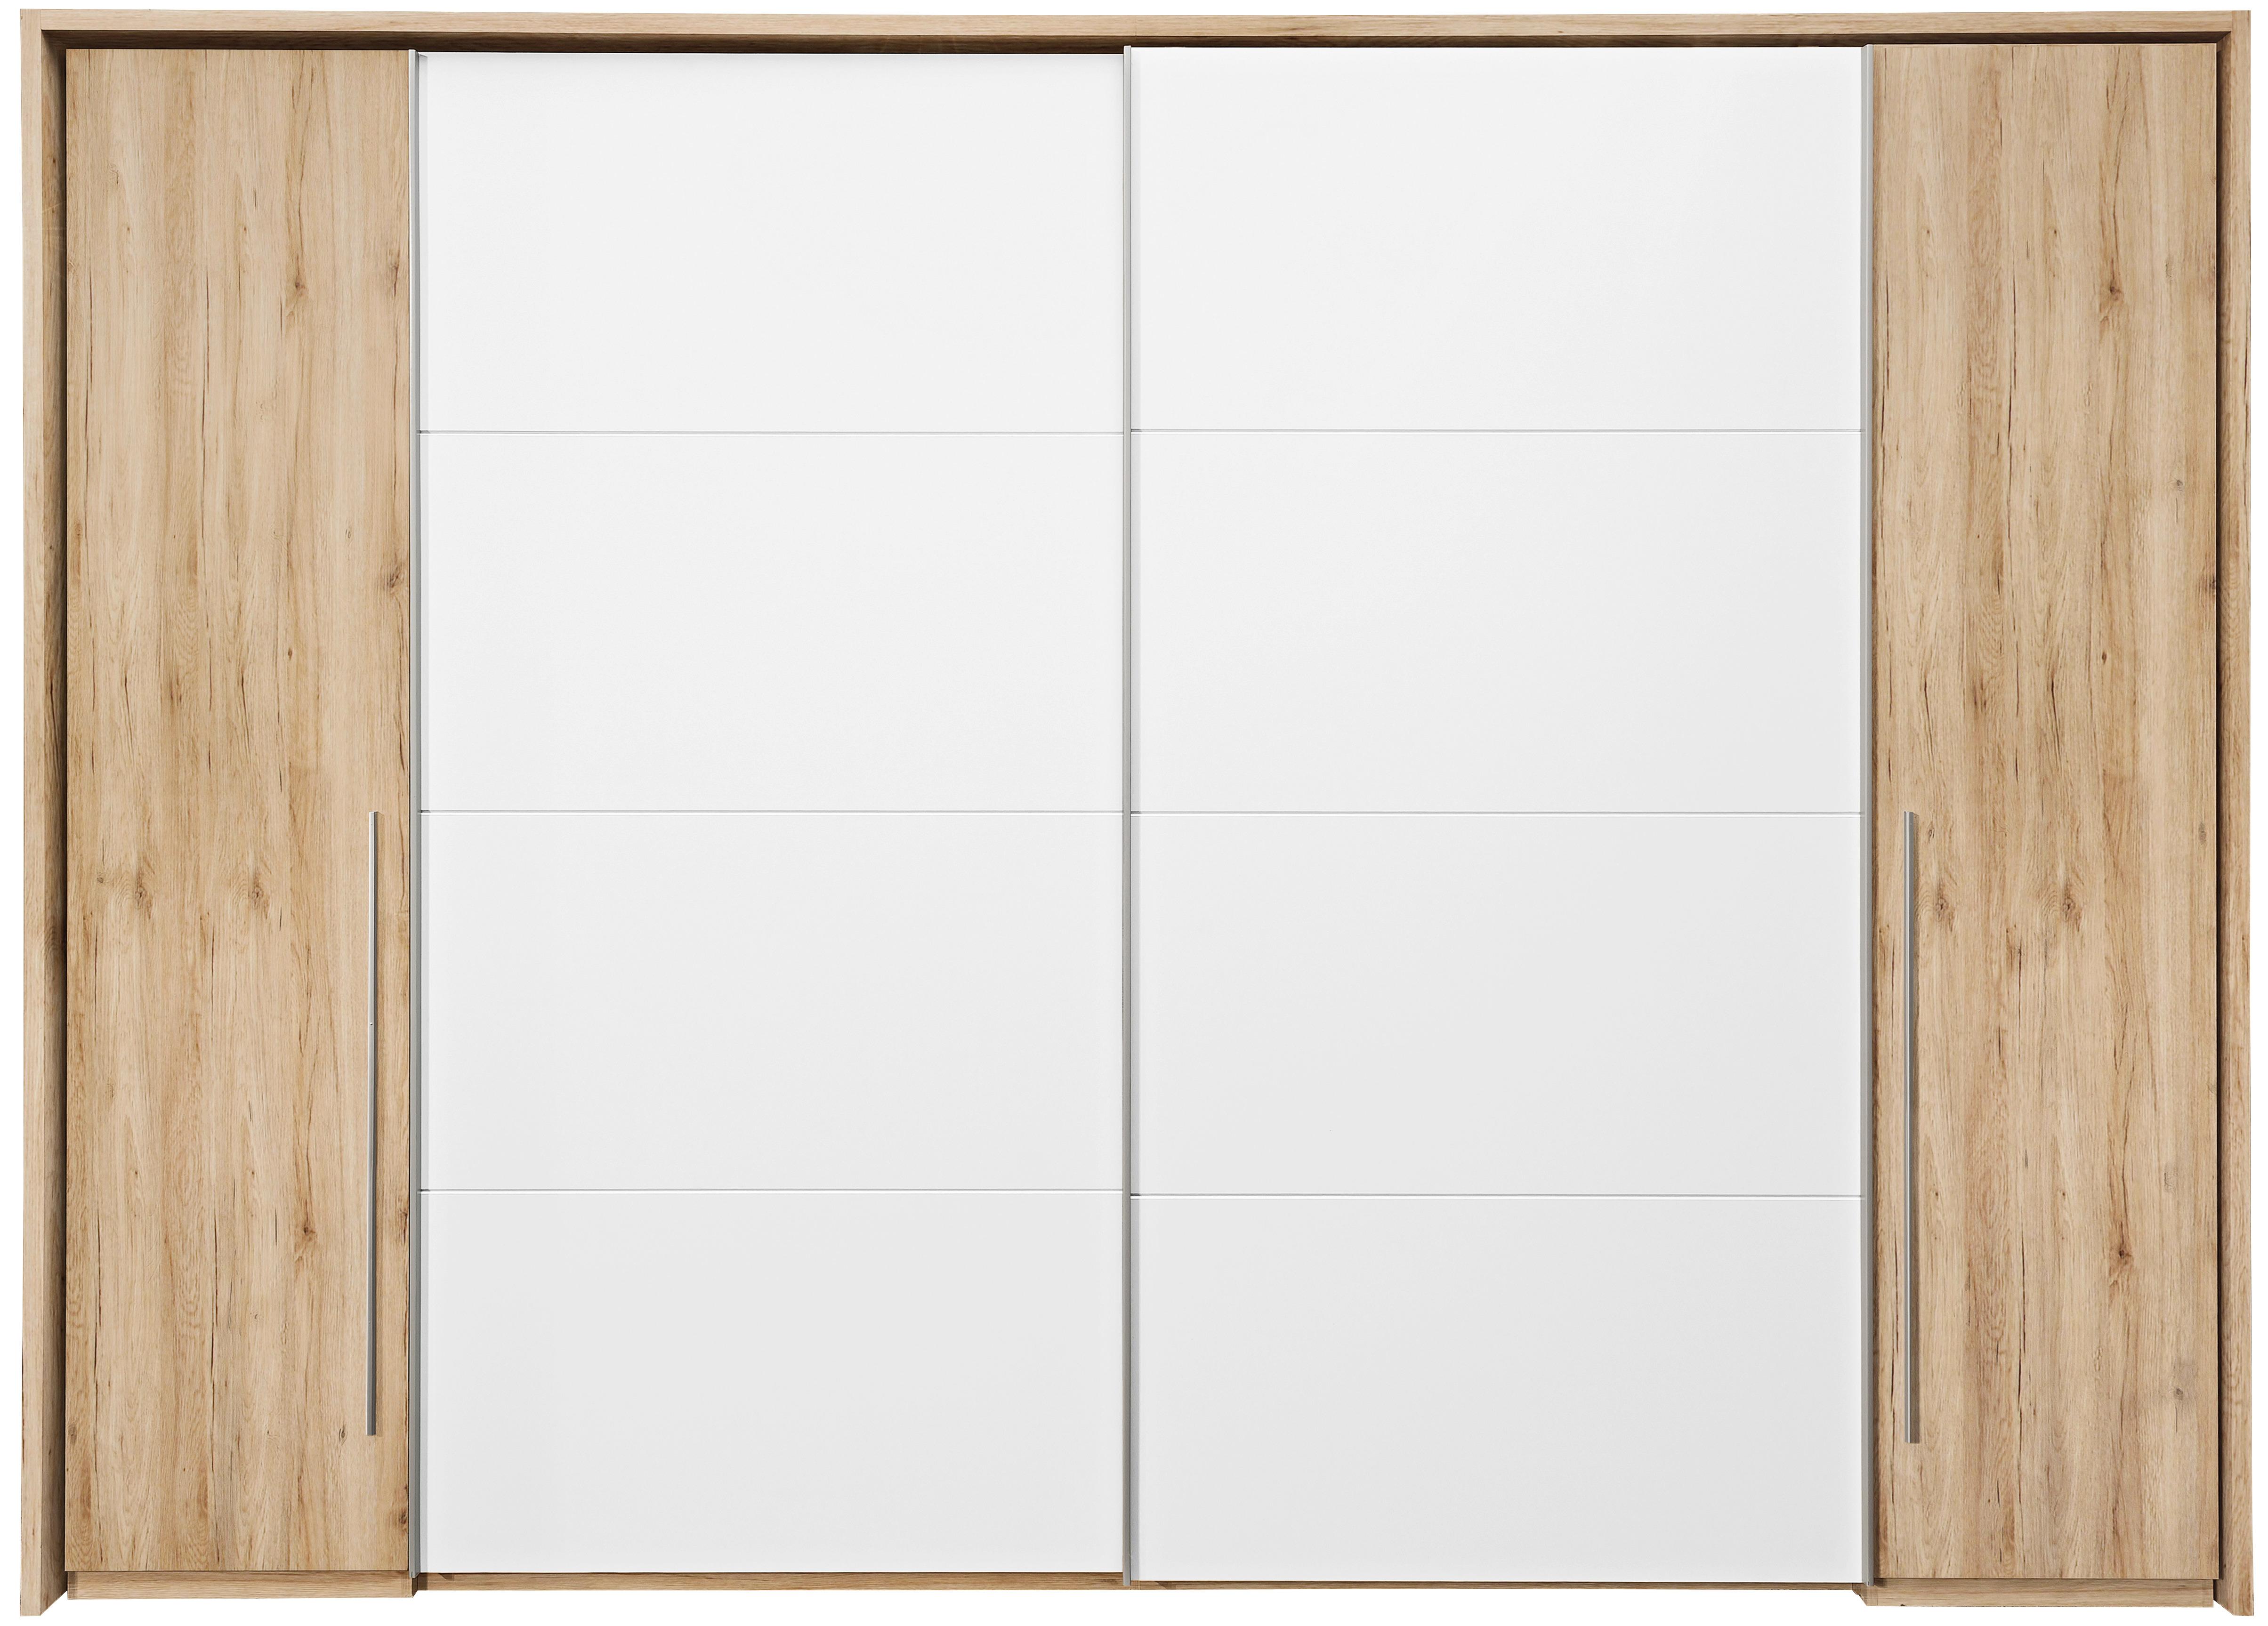 Skříň S Posuvnými Dveřmi Joker,šířka 270cm - bílá/barvy dubu, Konvenční, dřevo/plast (270/225/61cm) - Based